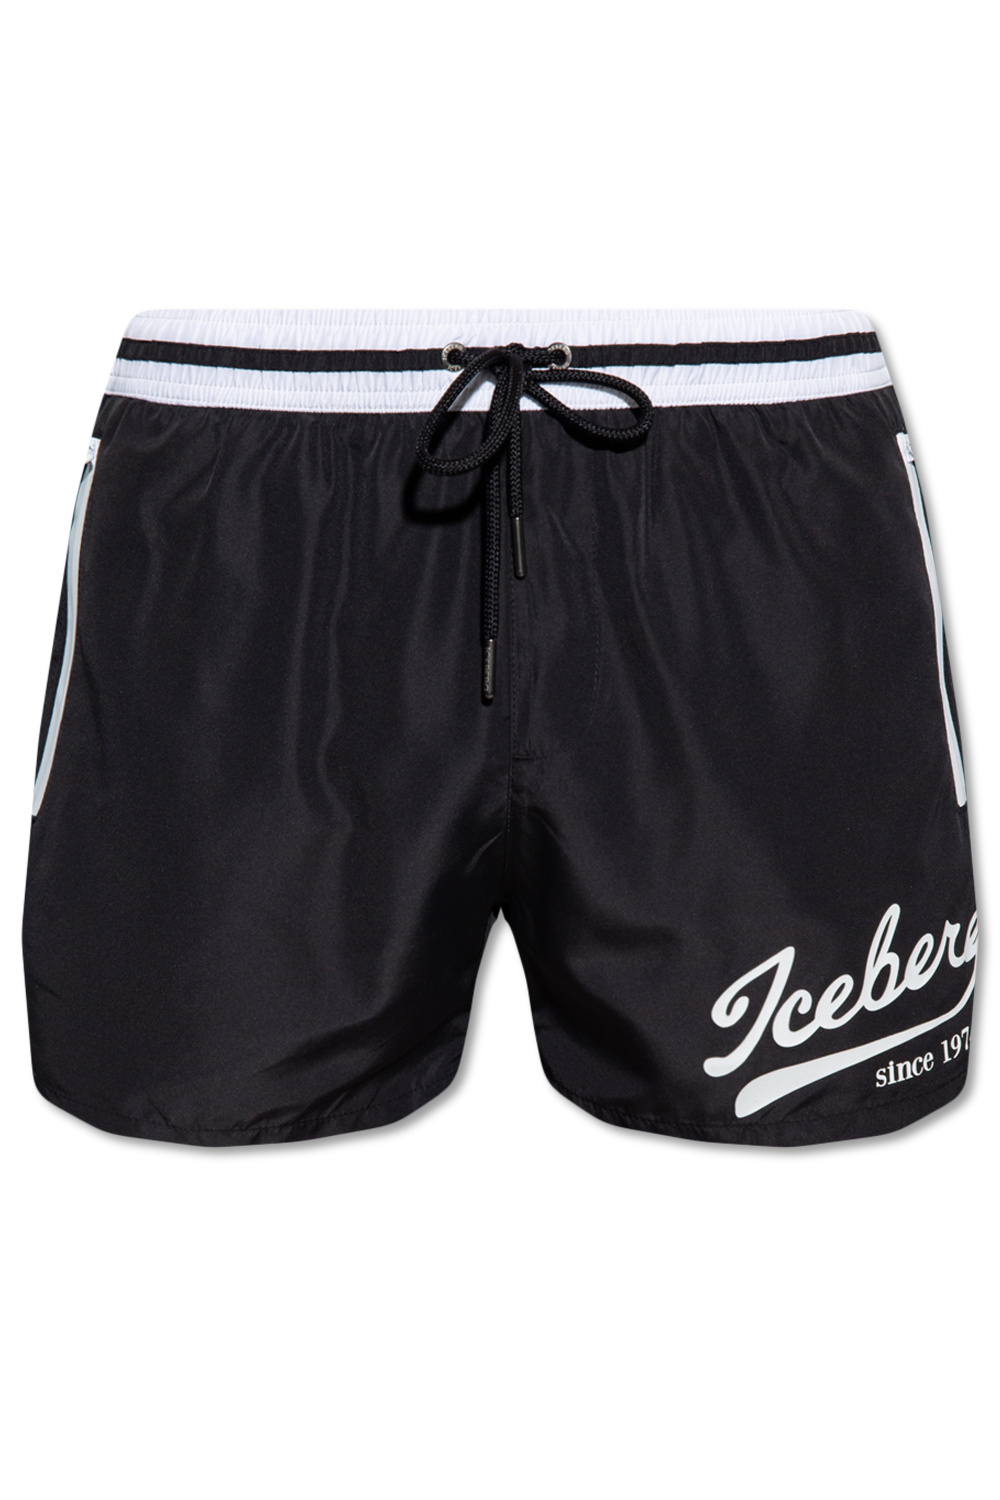 print Iceberg checkerboard StclaircomoShops JW | Swim hoodie Clothing Men\'s | shorts Anderson |